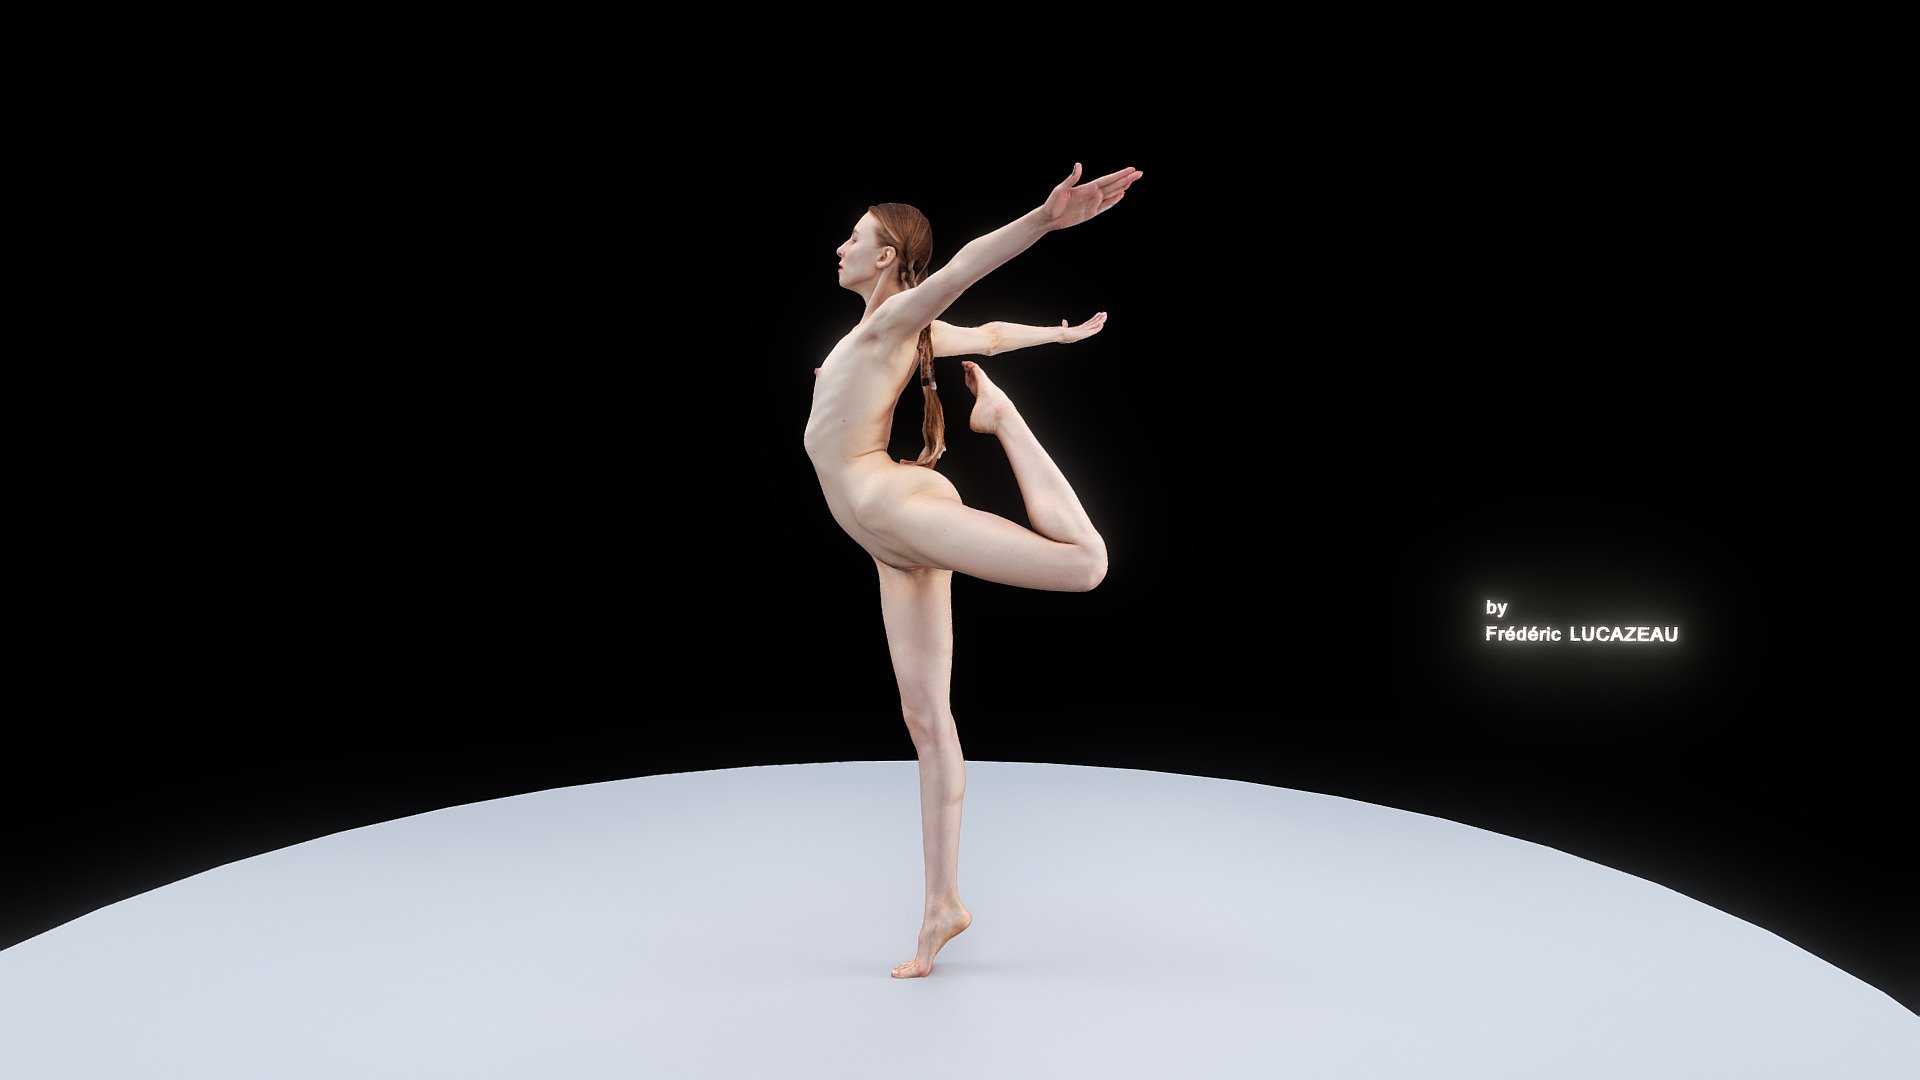 stella model nude dance jumping in a photostudio